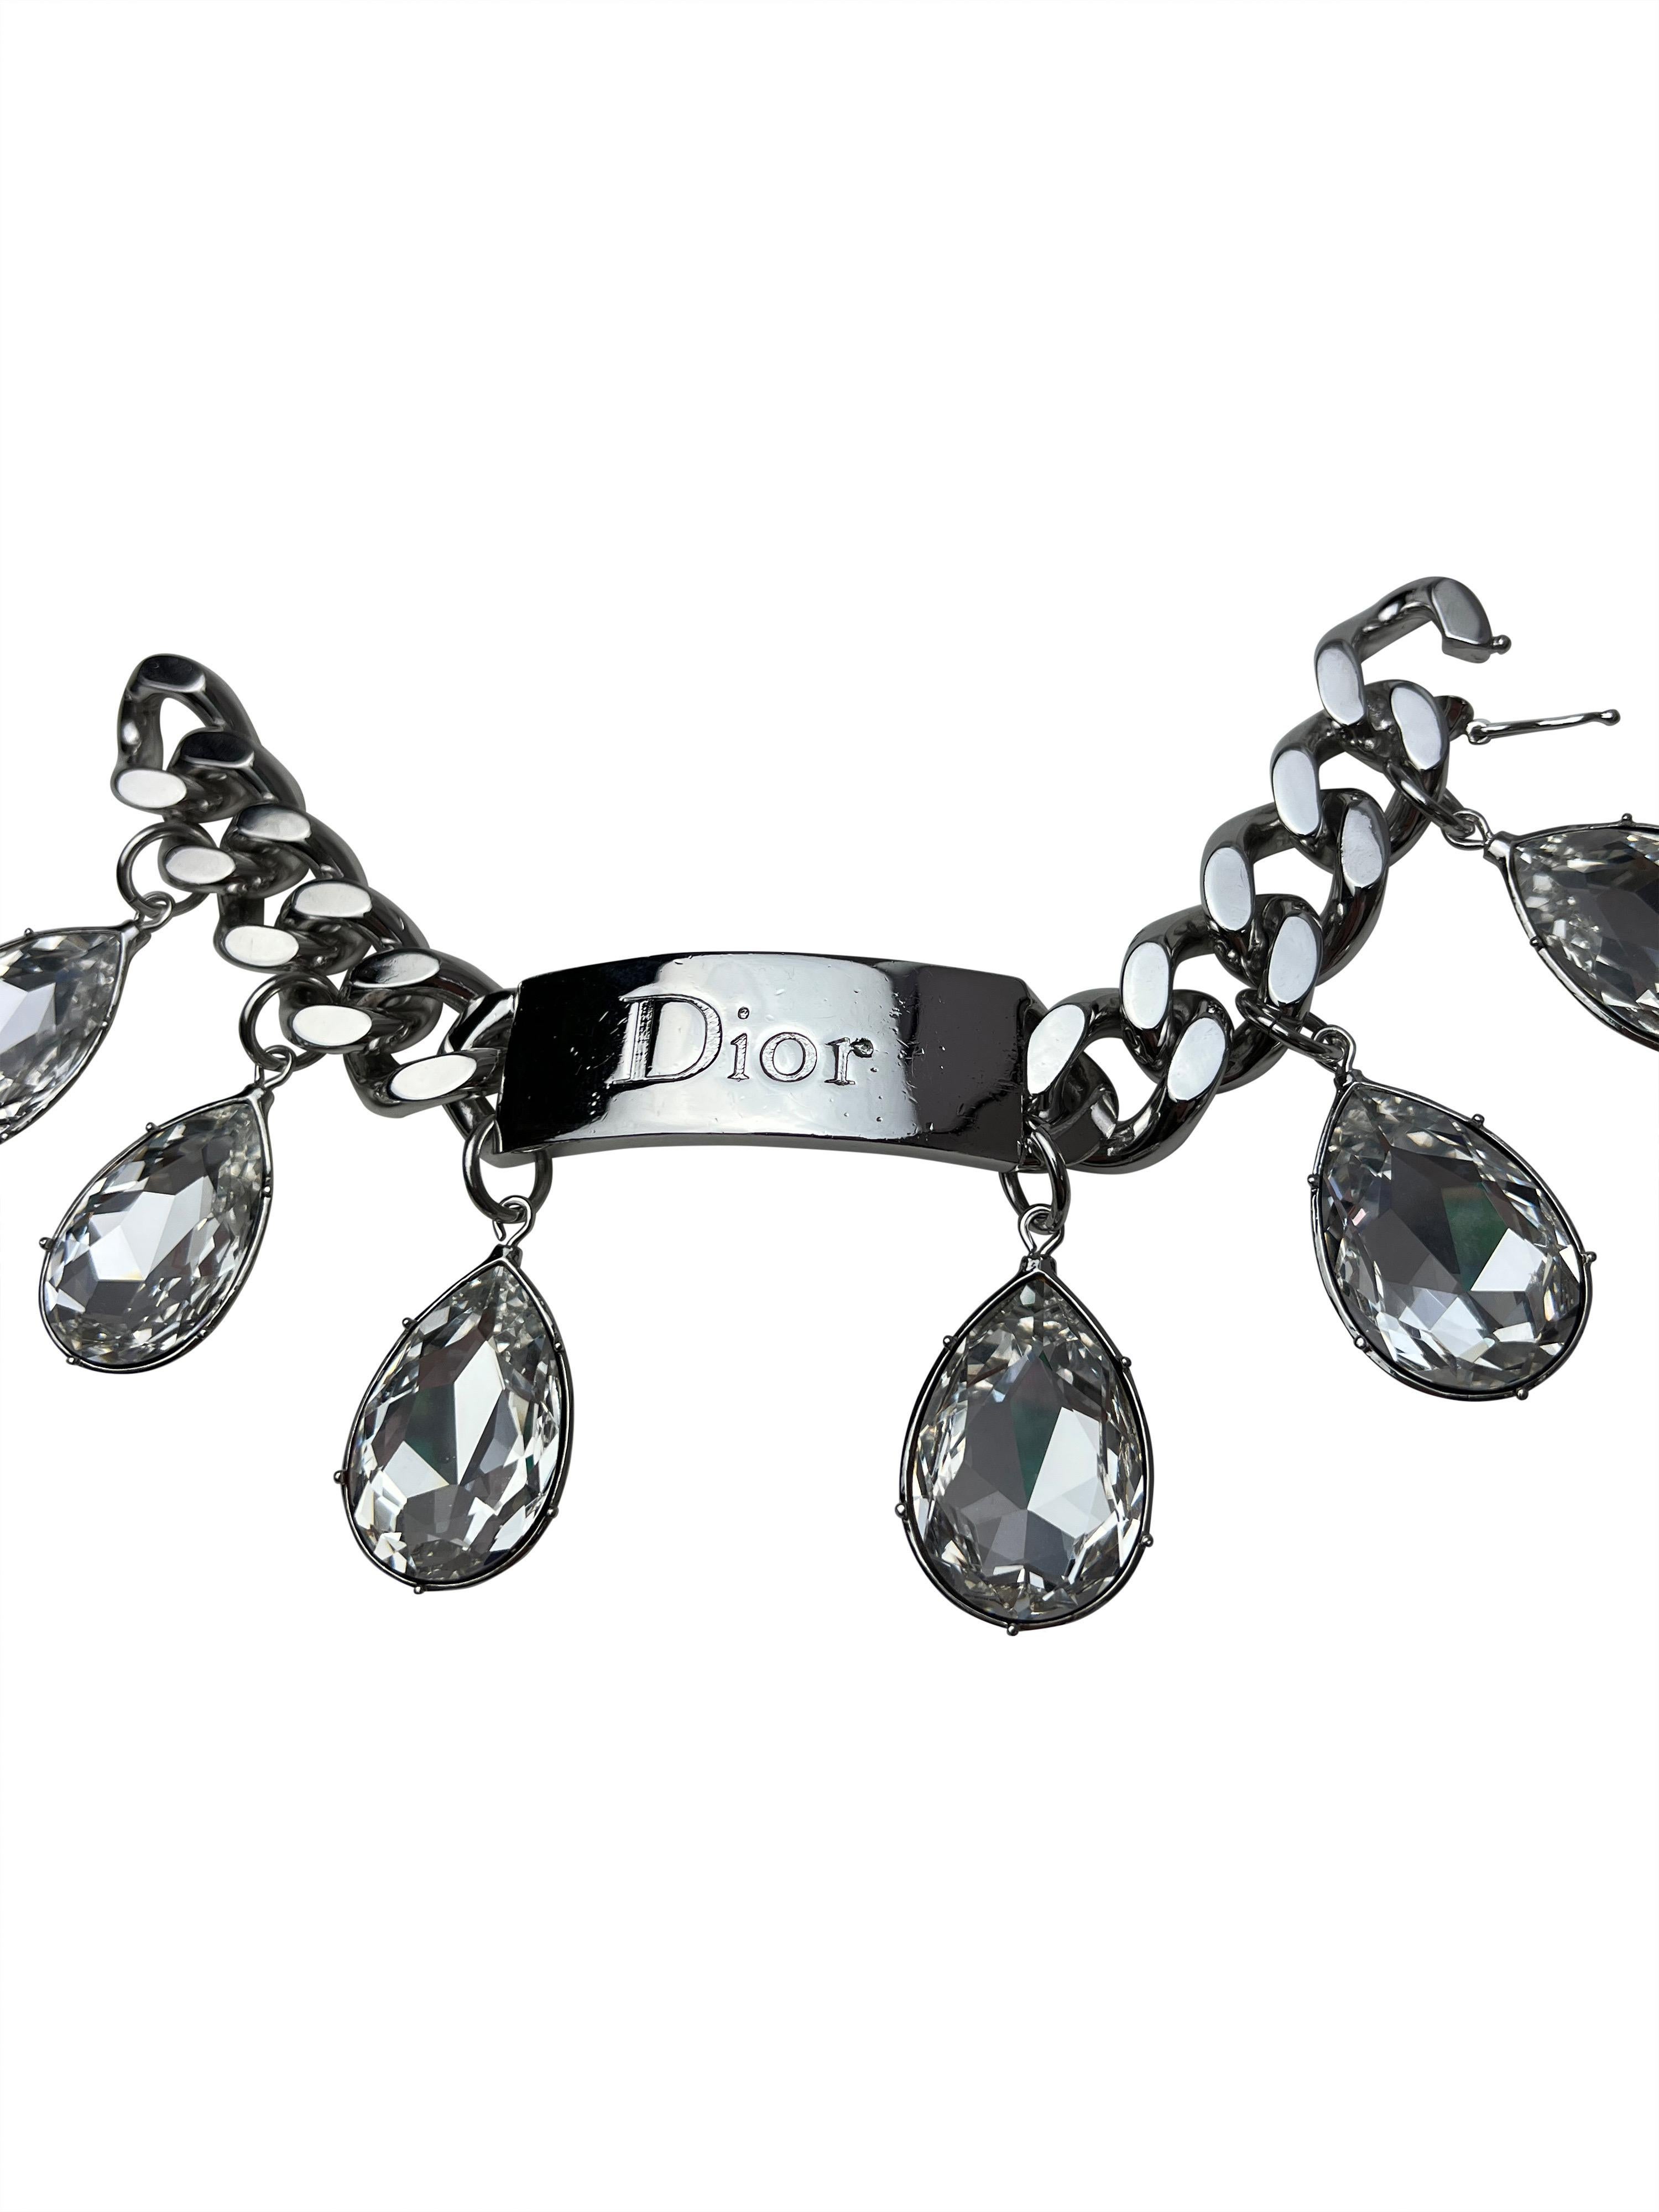 Dior by John Galliano Fall 2004 Swarovski Crystal Runway Bracelet For Sale 1